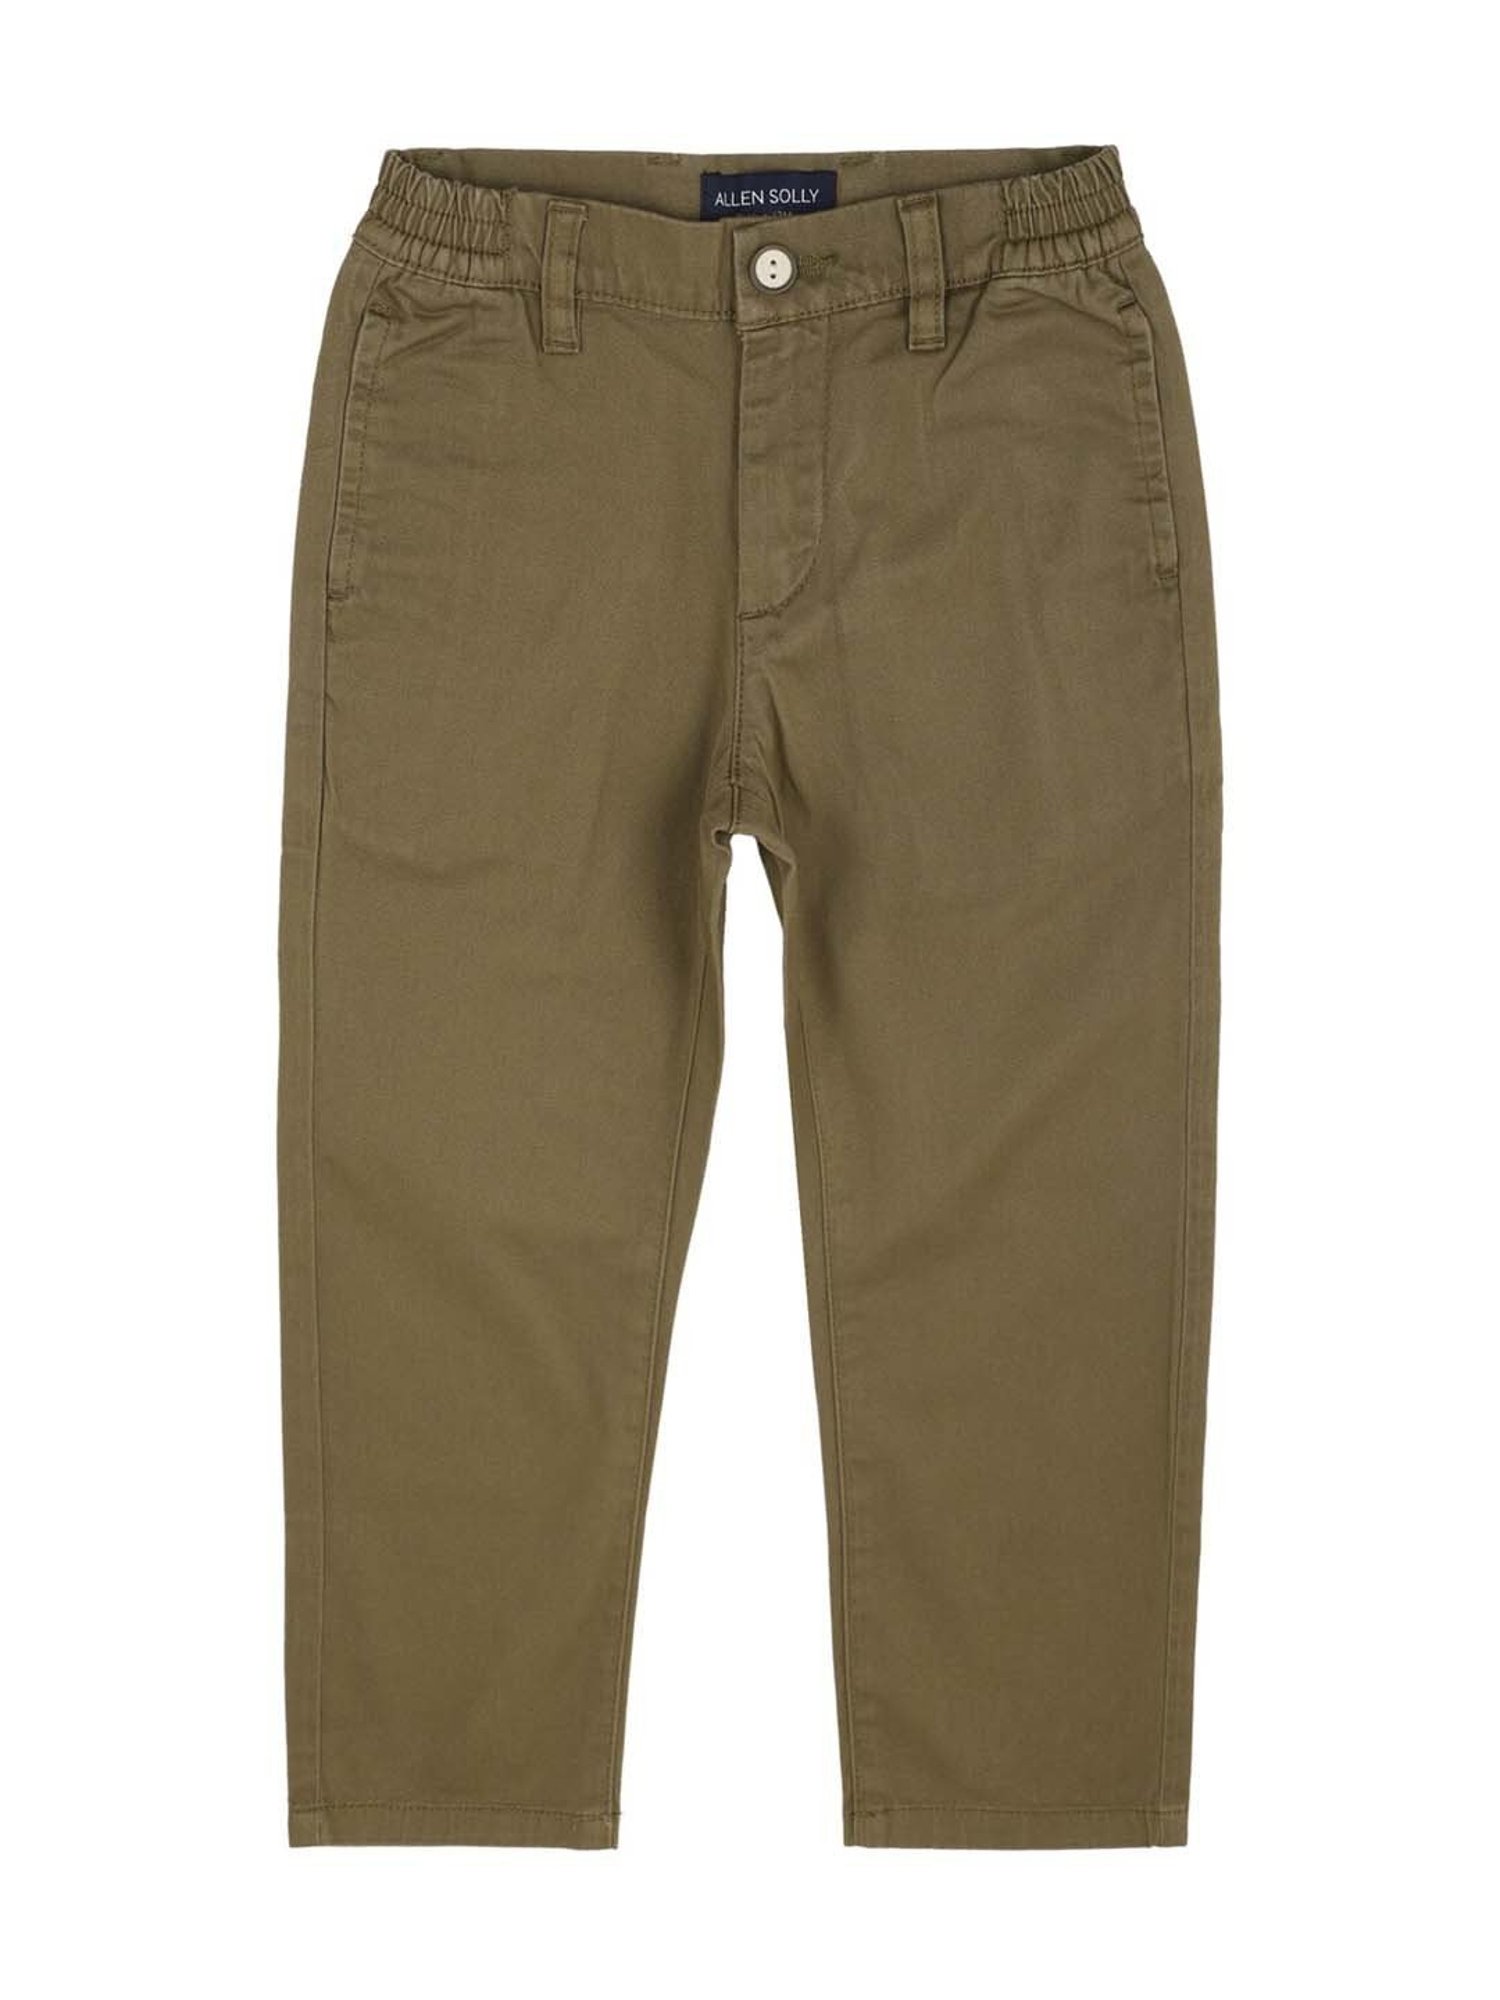 Buy Women Khaki Regular Fit Solid Business Casual Trousers Online - 221341  | Allen Solly